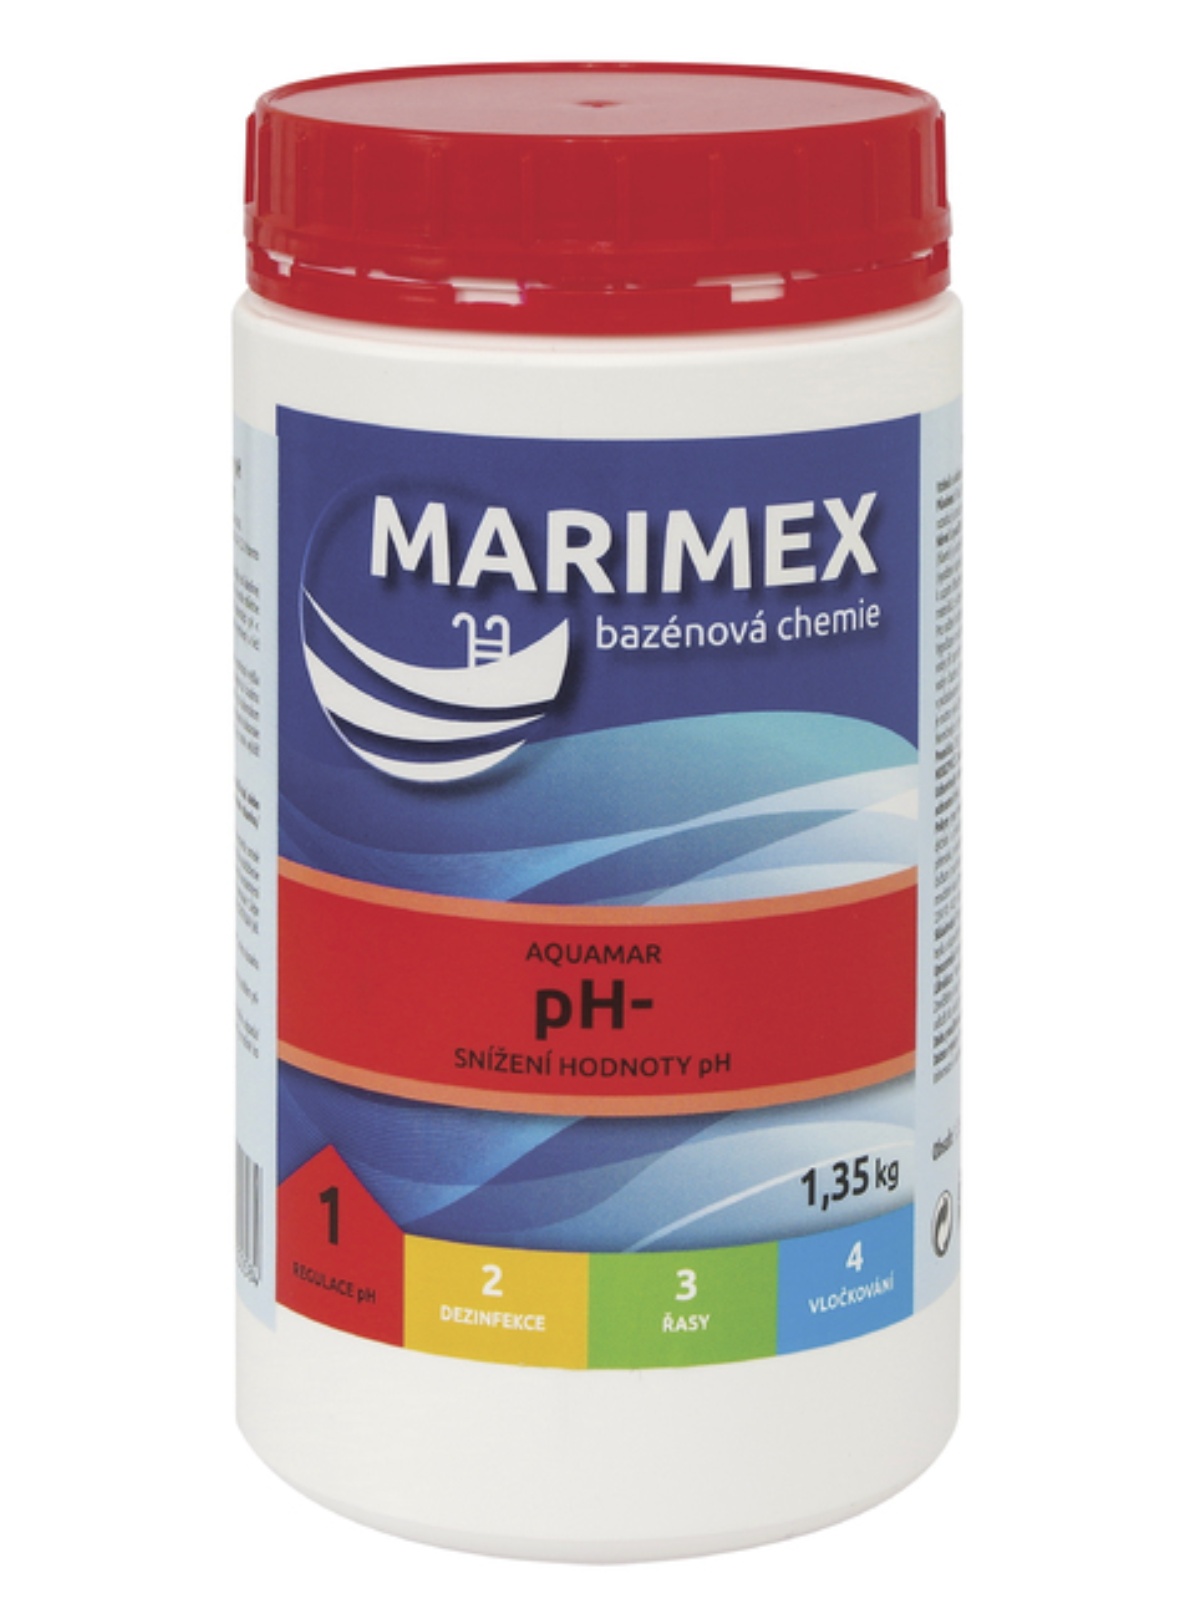 MARIMEX AQuaMar pH mínus 1,35 kg